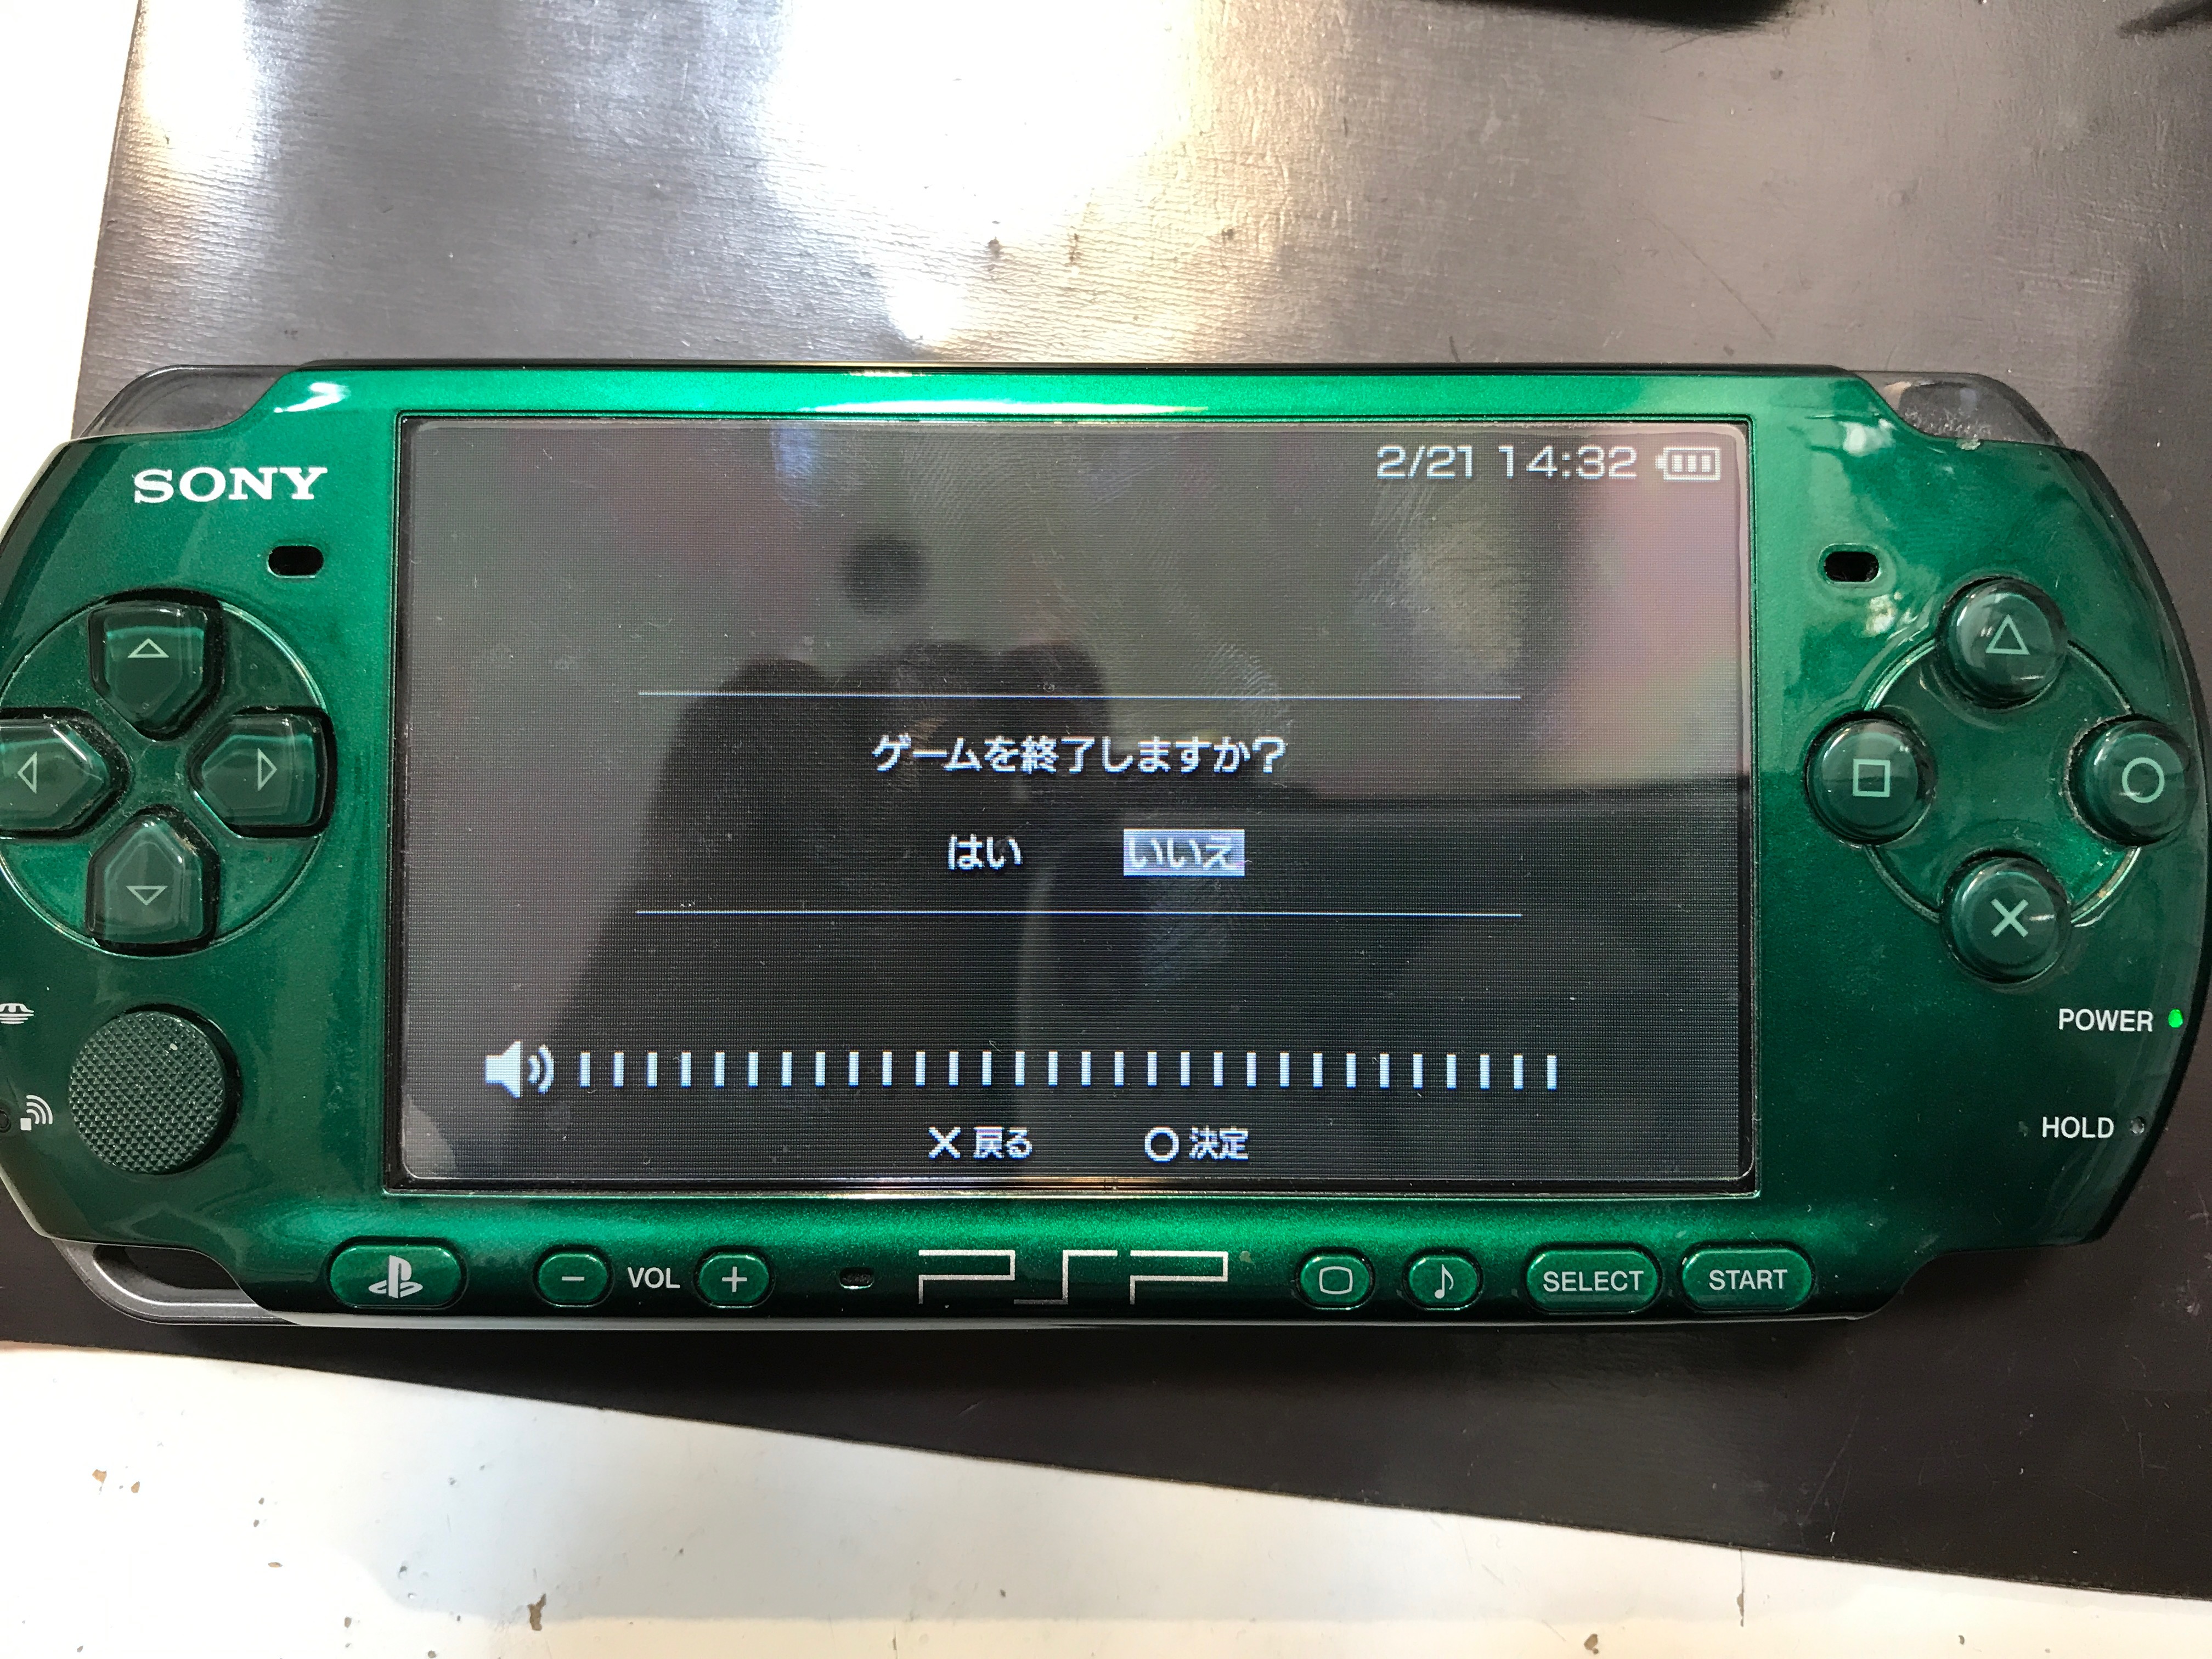 Psp3000 Psボタンのお掃除 Nintendo3ds Switch Psp 修理のゲームホスピタル Nintendo3ds ニンテンドーds Psp Switch 修理